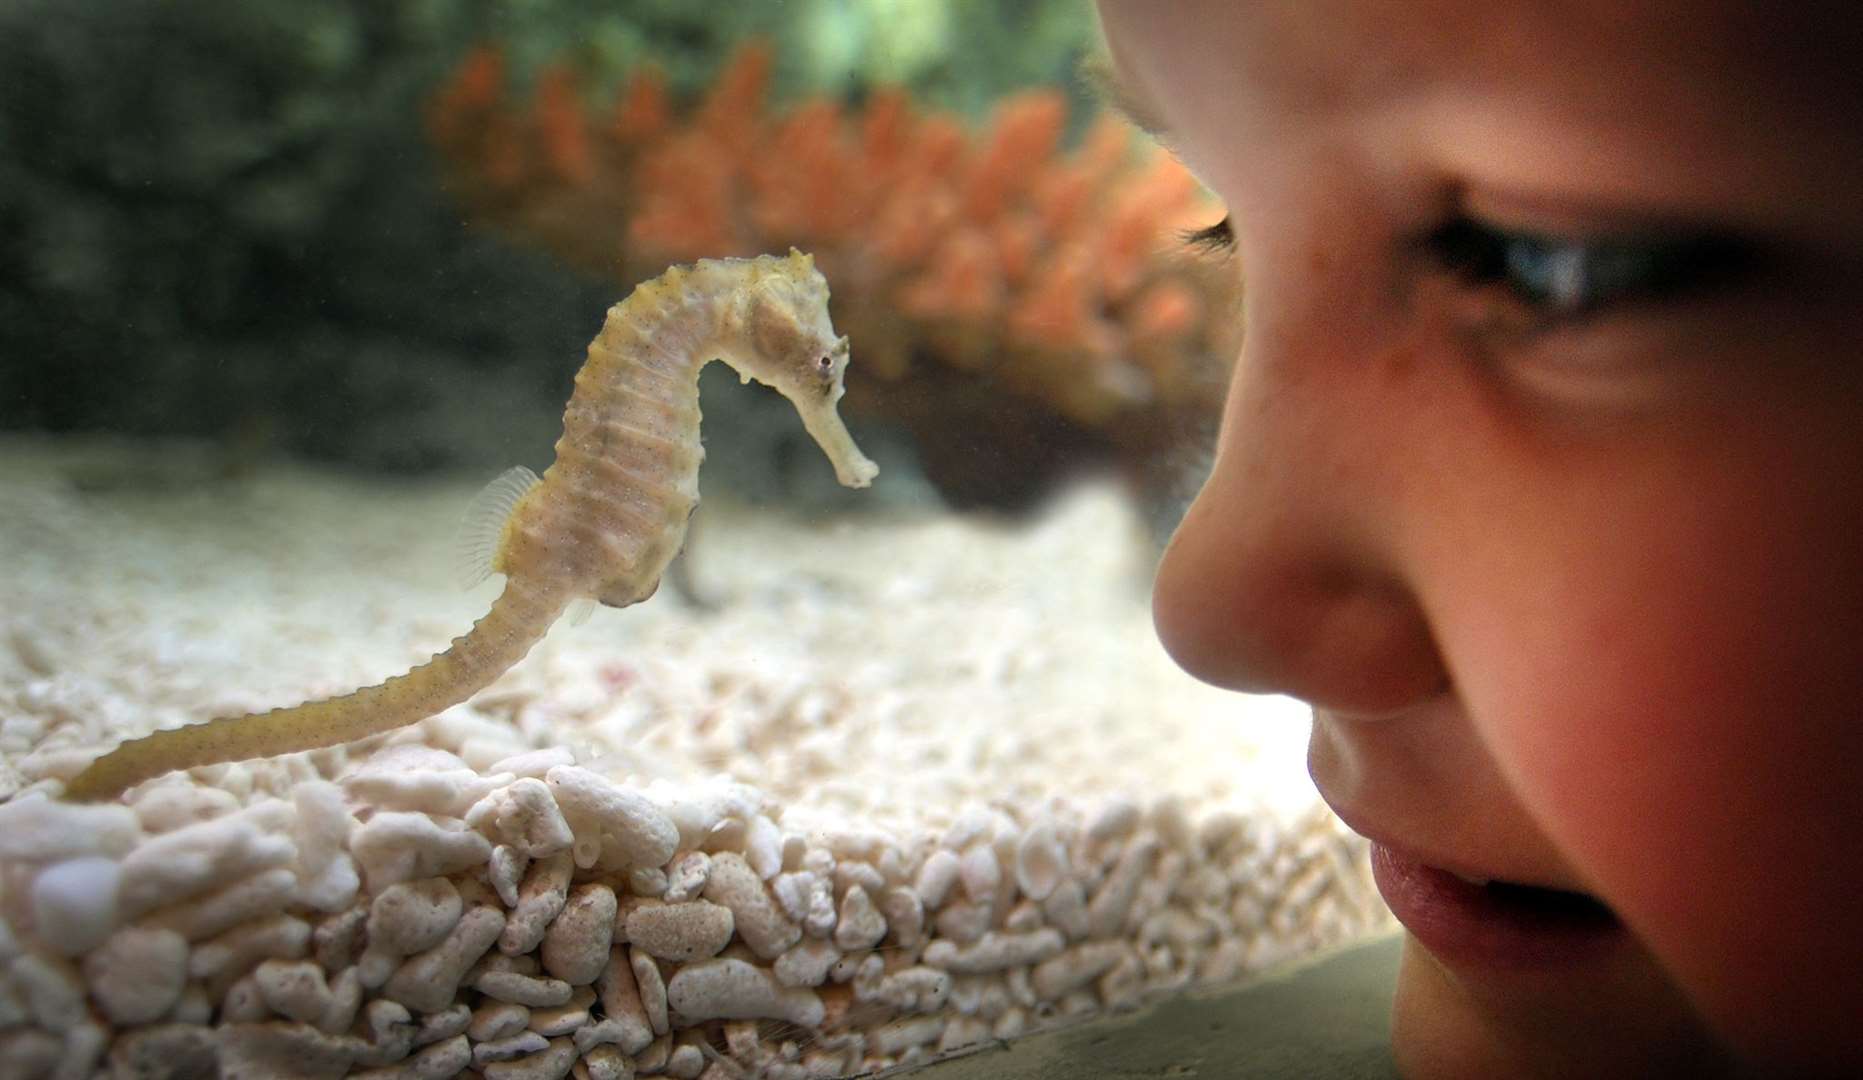 Sea Life aquariums are popular family attractions